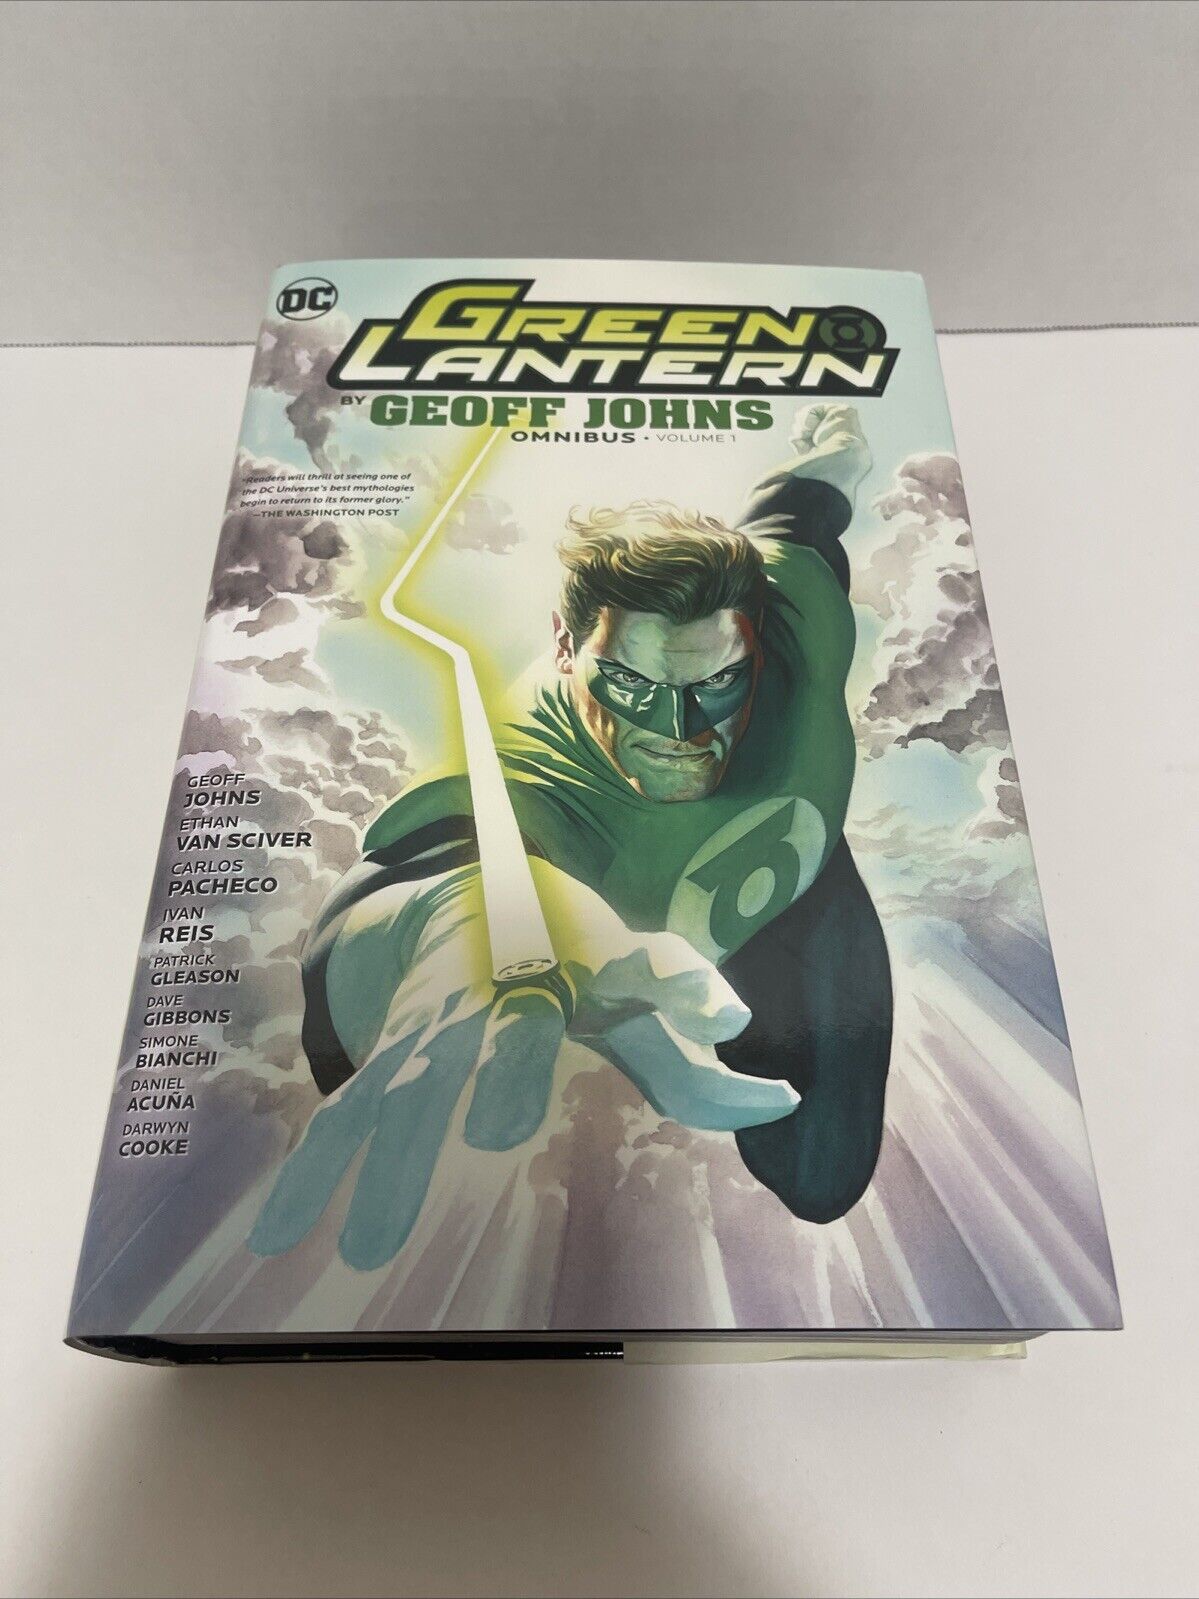 Green Lantern by Geoff Johns Omnibus #1 (DC Comics).